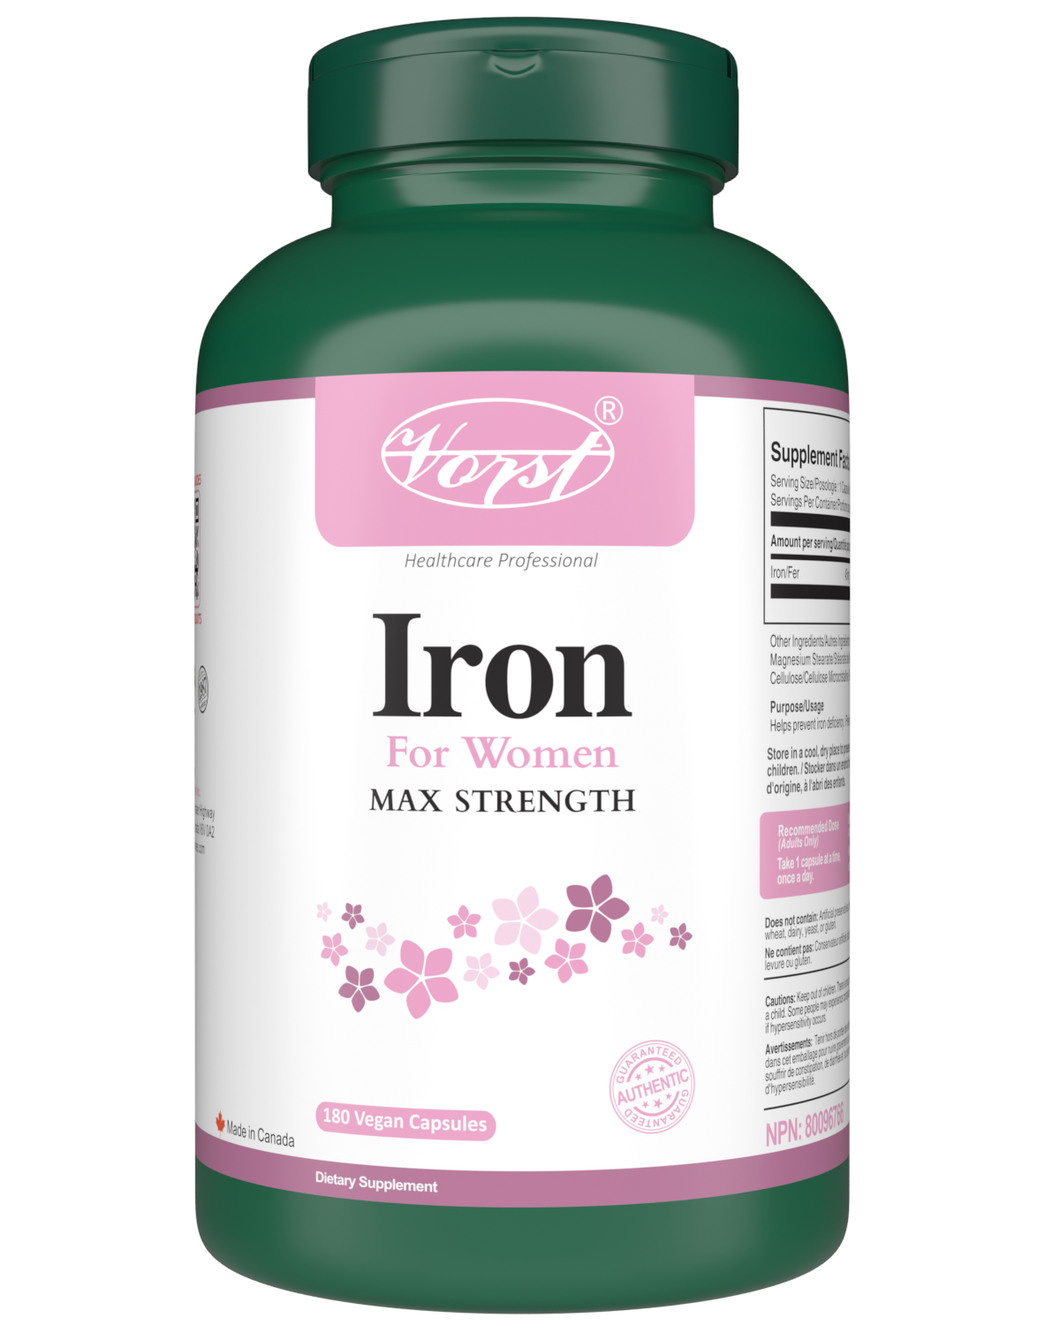 Iron for Women 180 Vegan Capsules